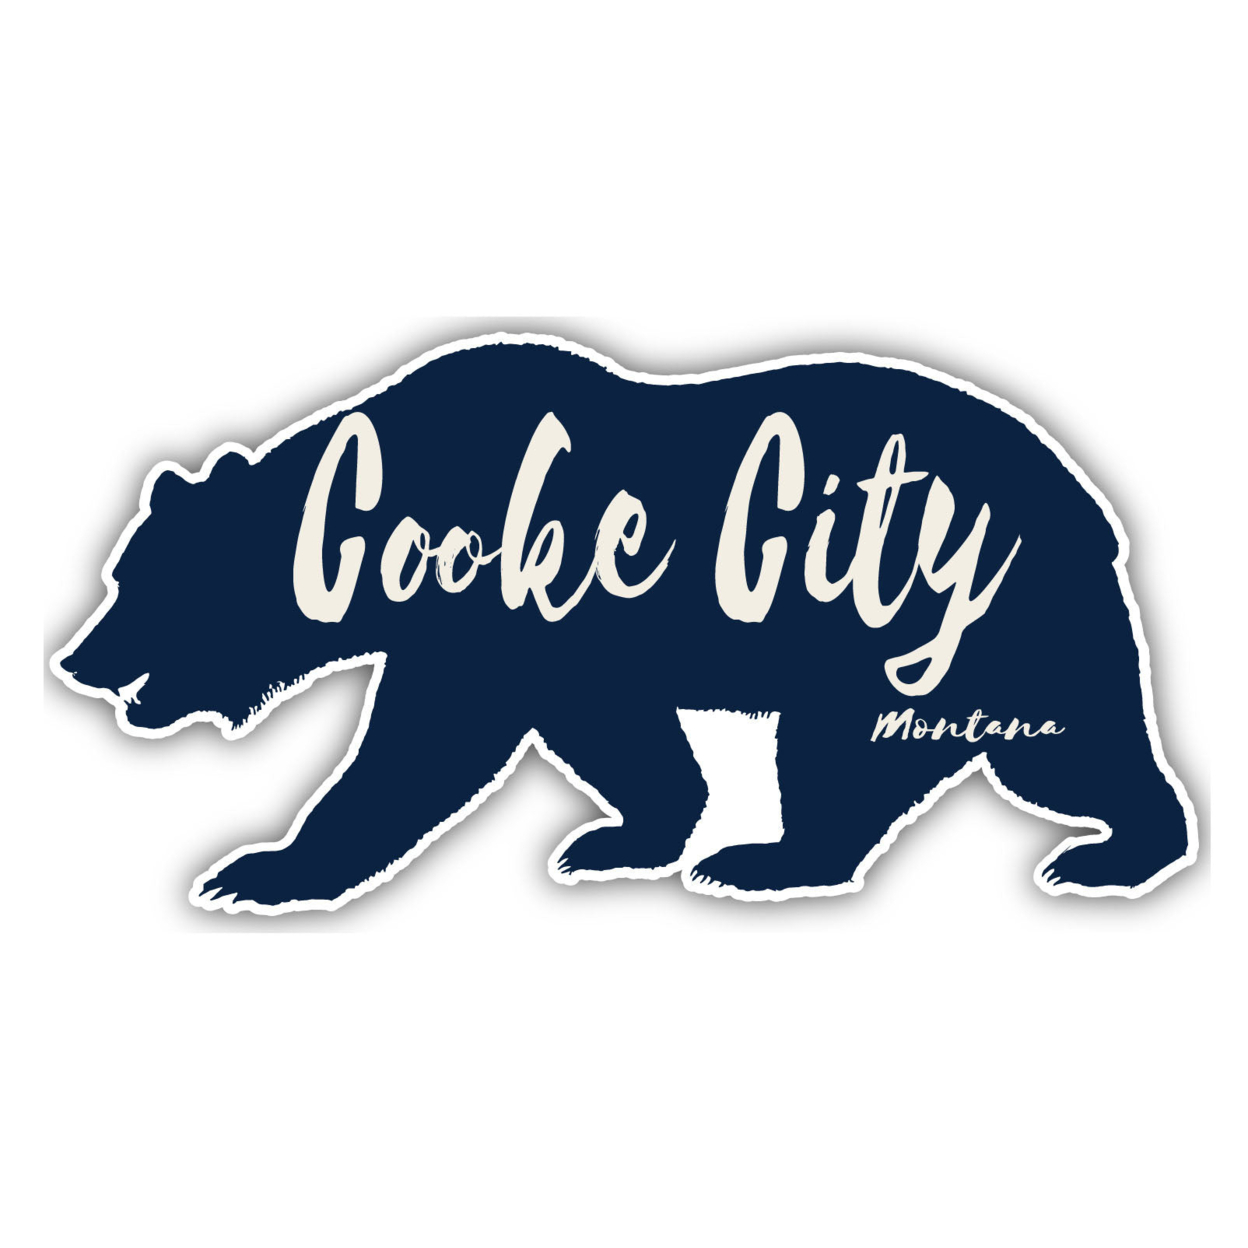 Cooke City Montana Souvenir Decorative Stickers (Choose Theme And Size) - Single Unit, 8-Inch, Bear